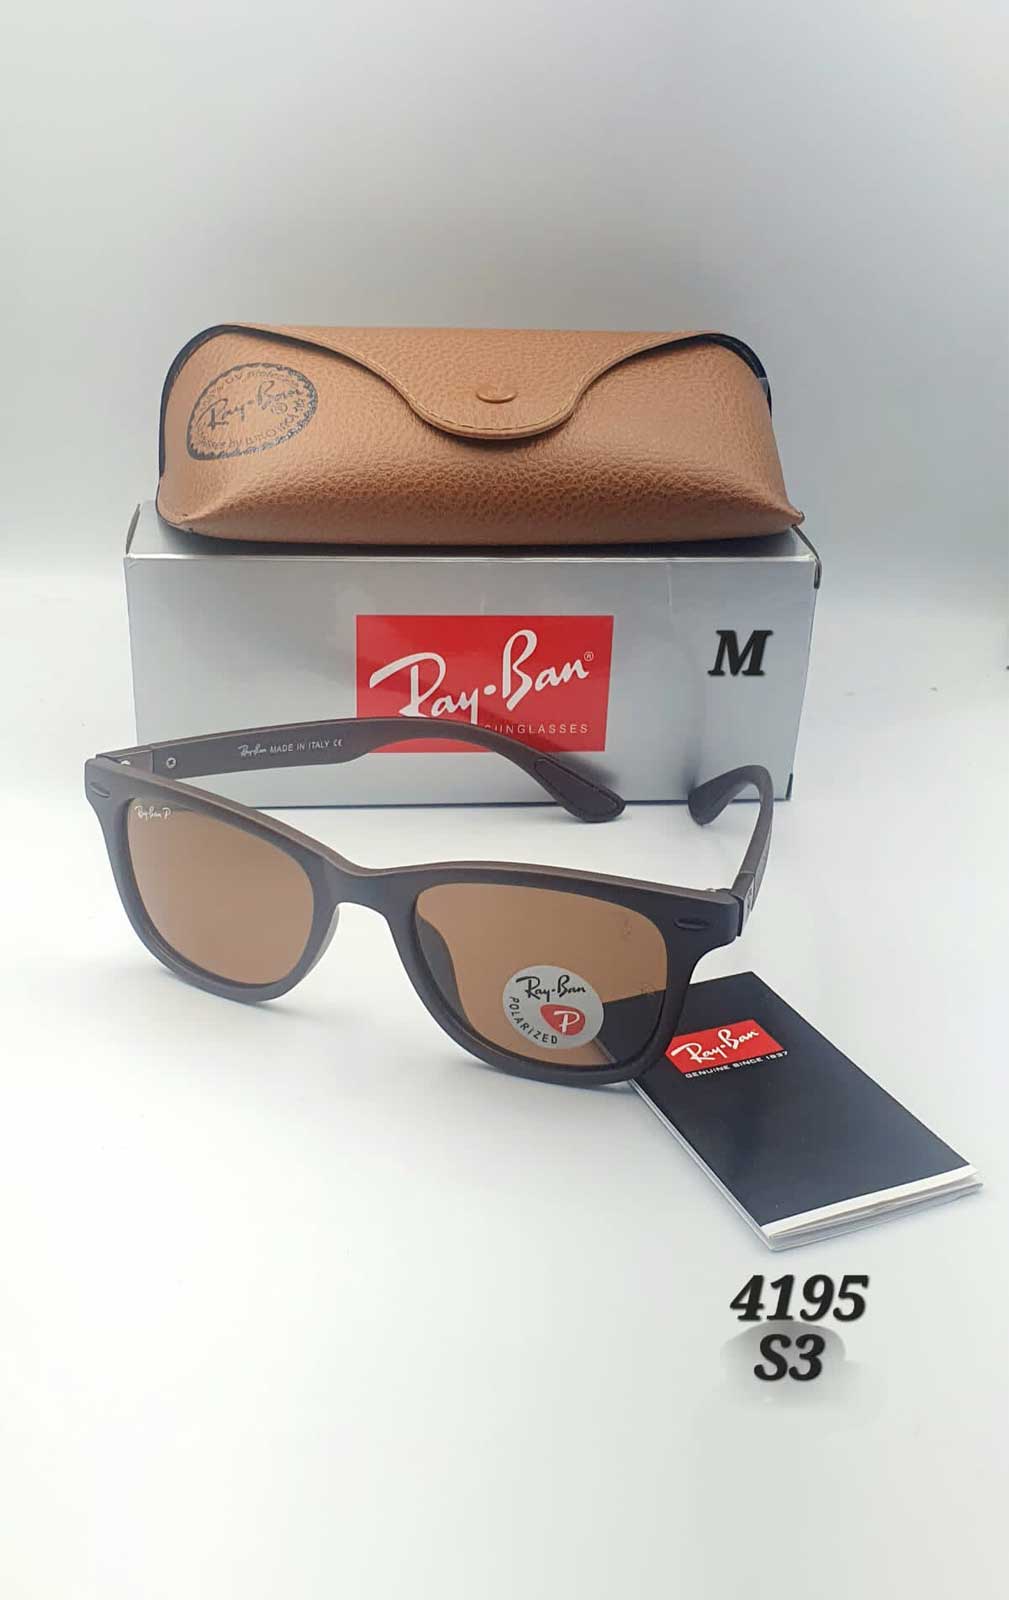 Classic Polarized Men's Sunglasses-4195S3